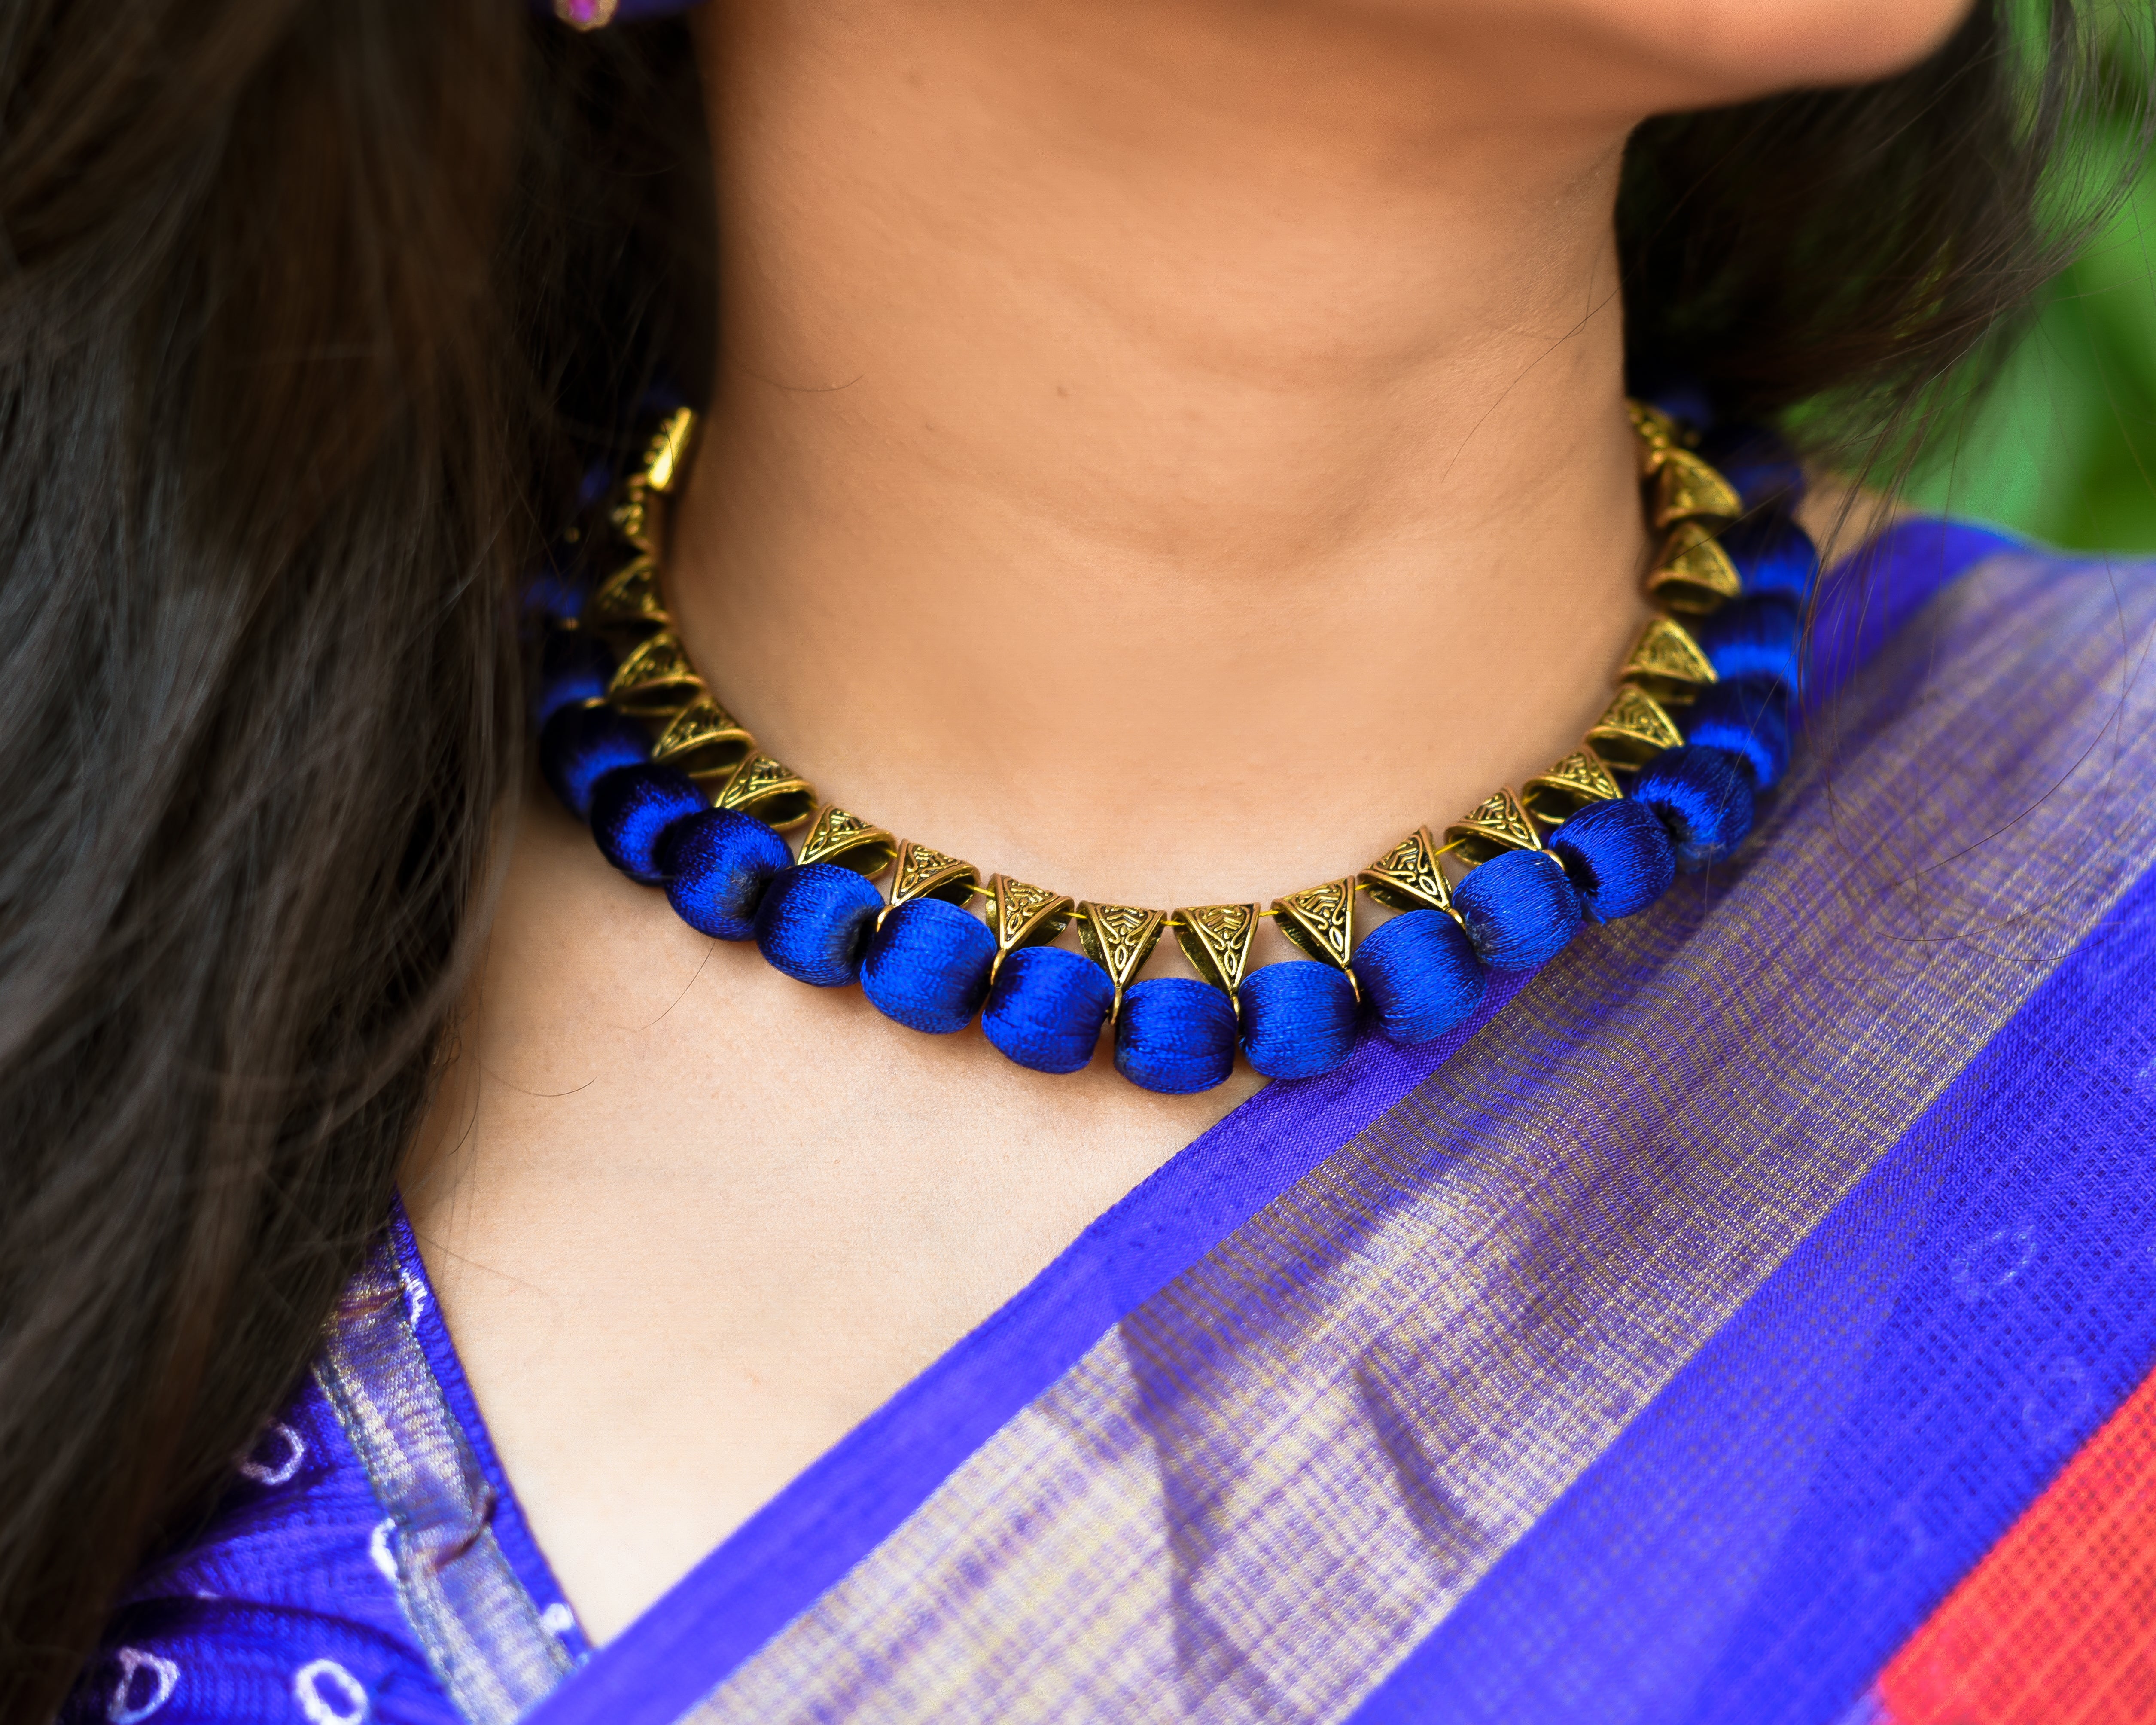 Silk Threads - Buy silk thread designer jewellery online india – Fashionous